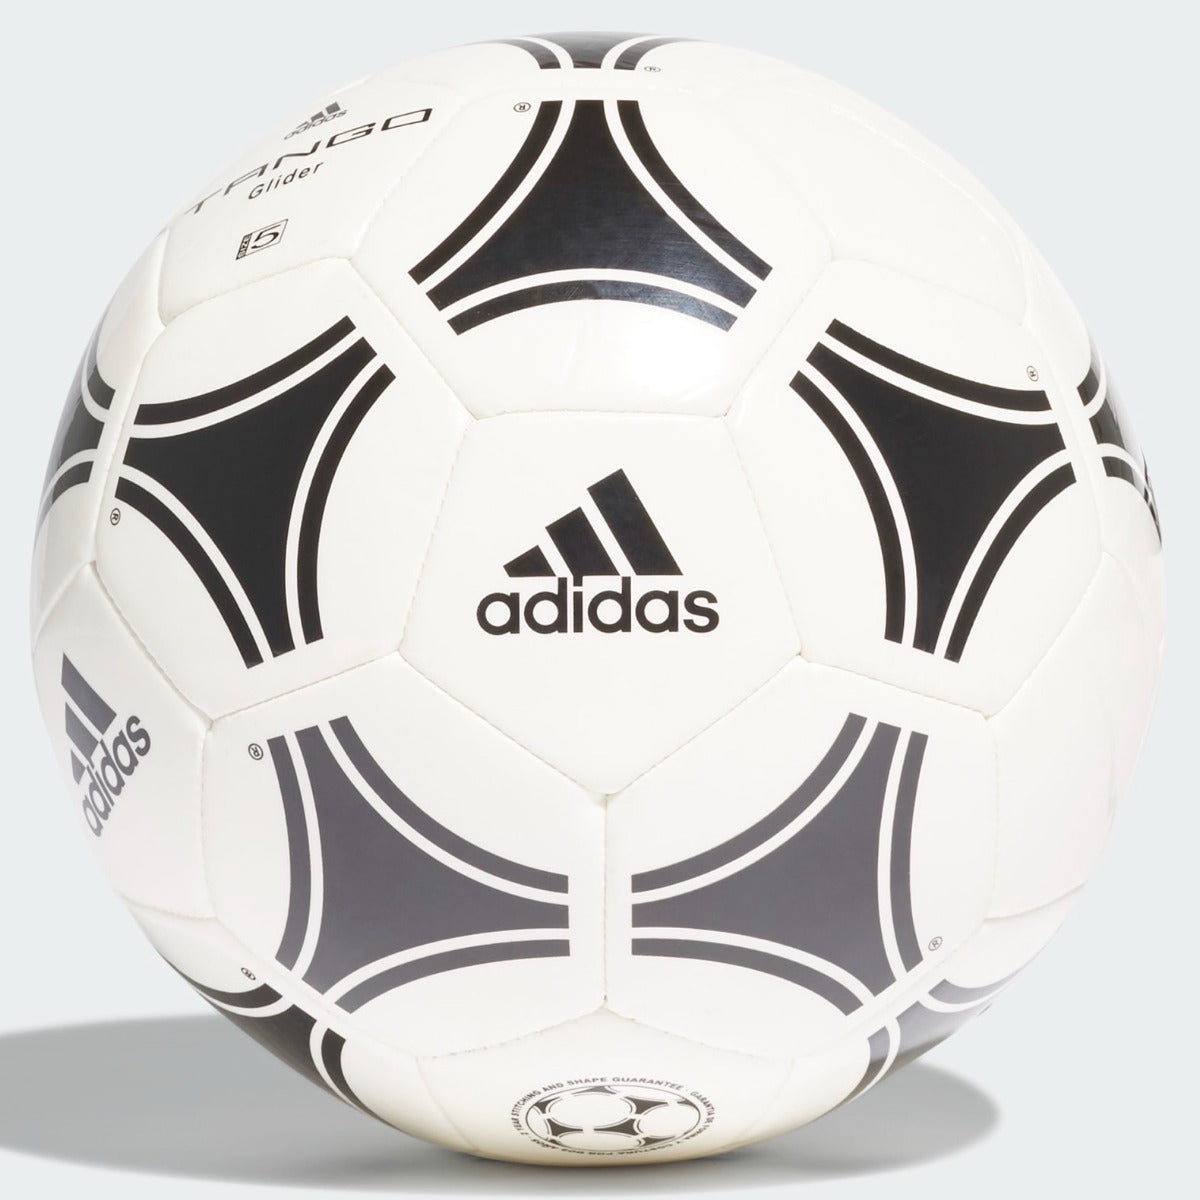 Adidas Tango Soccer Ball - White-Black